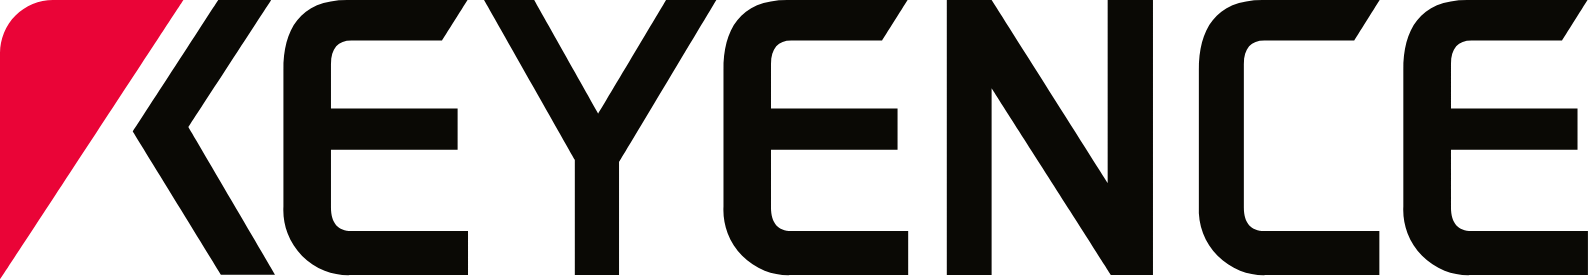 Keyence logo large (transparent PNG)